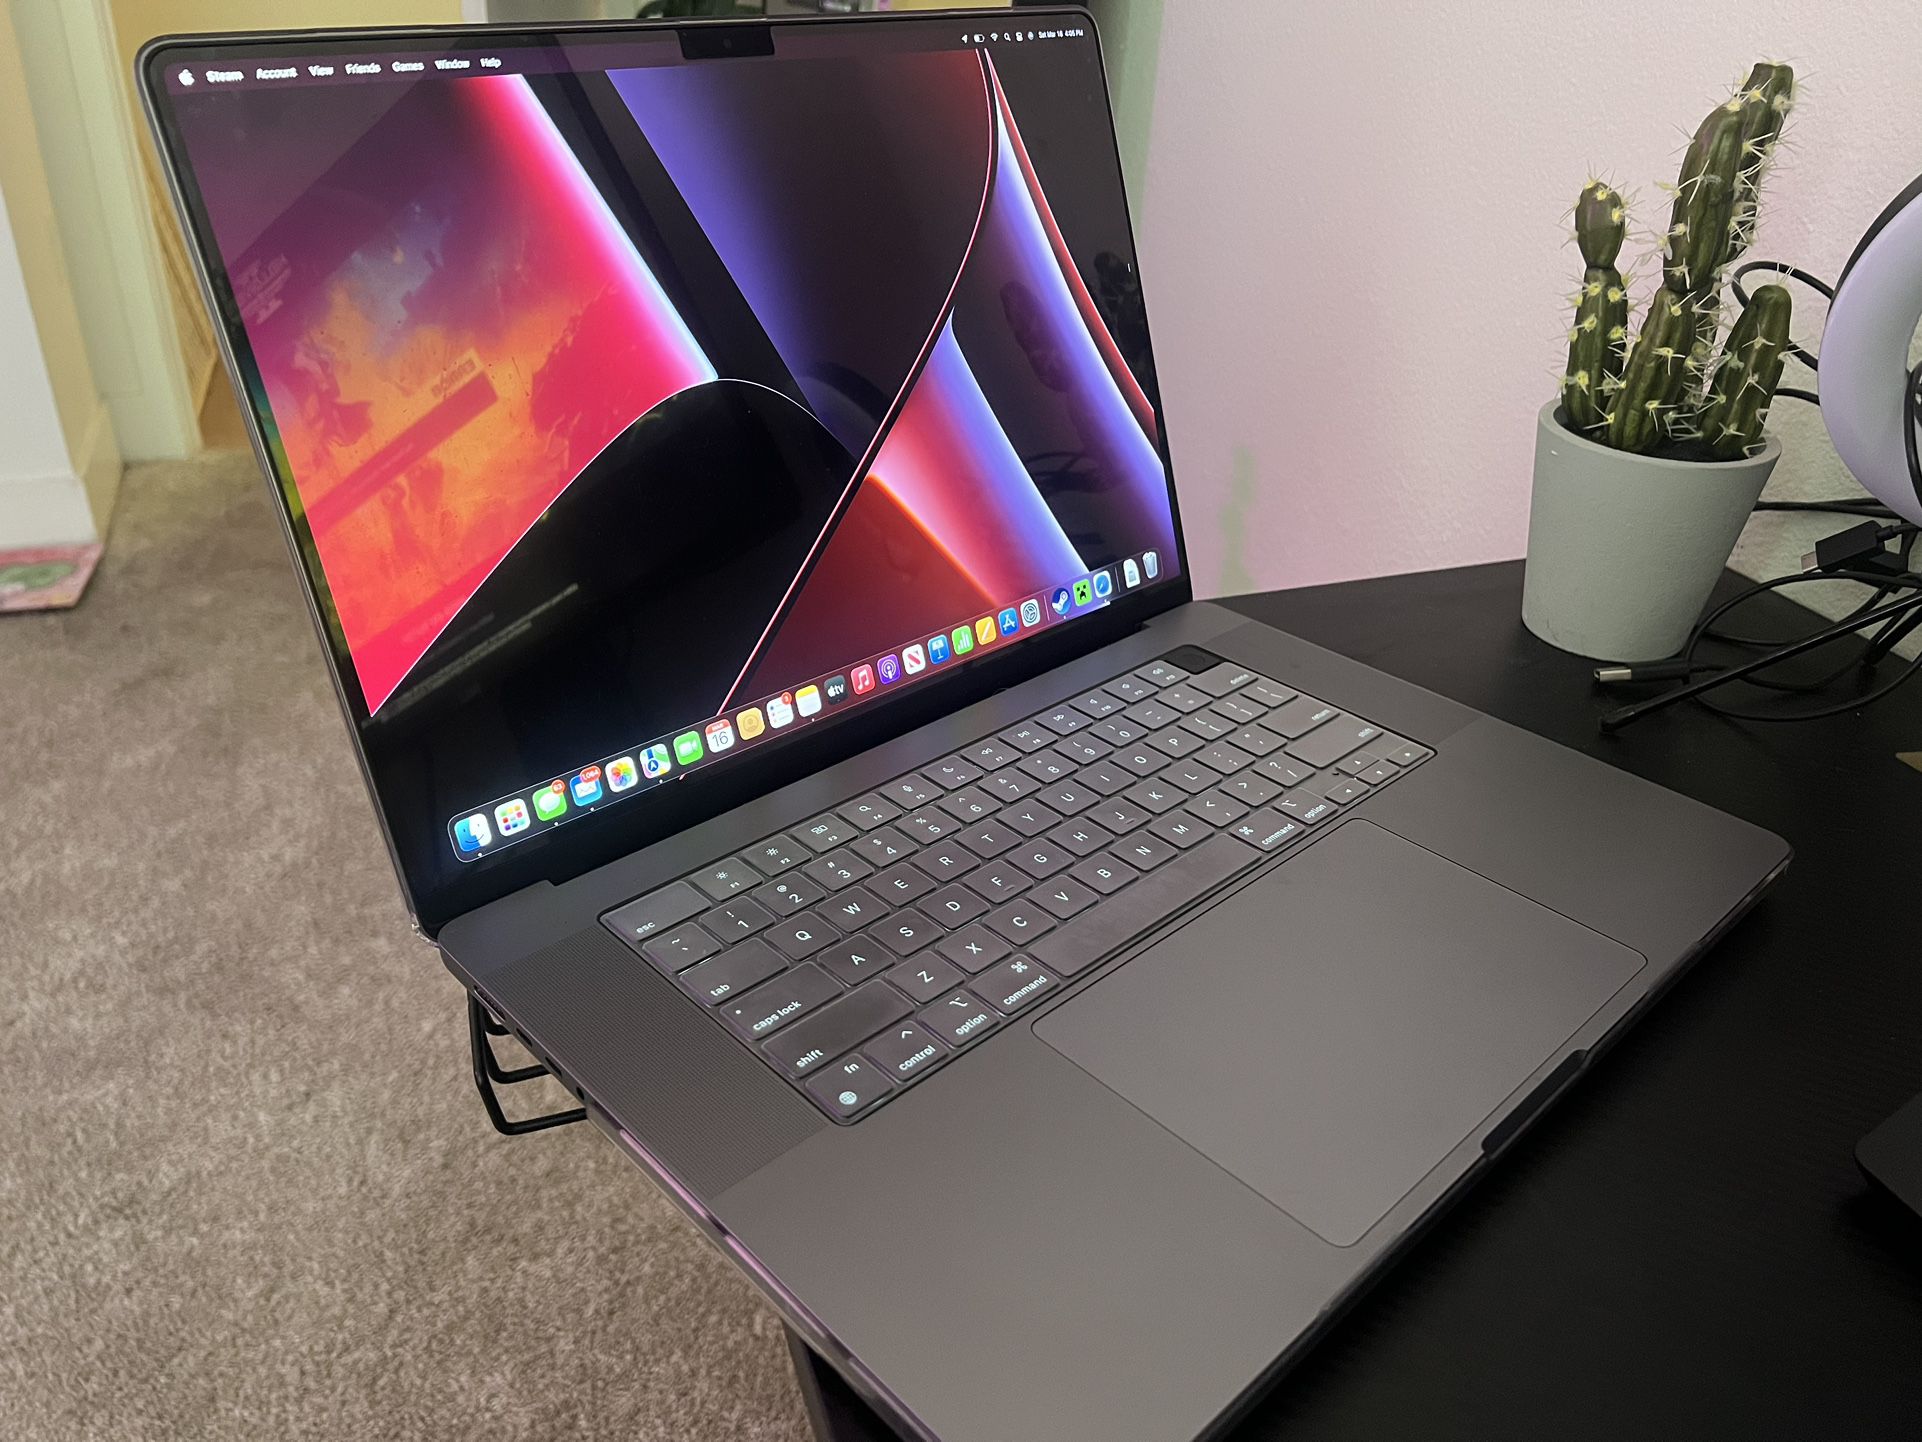 MacBook Pro 16" Laptop - Apple M1 Pro chip - 16GB Memory - 512GB SSD - Space Gray - Space Gray 